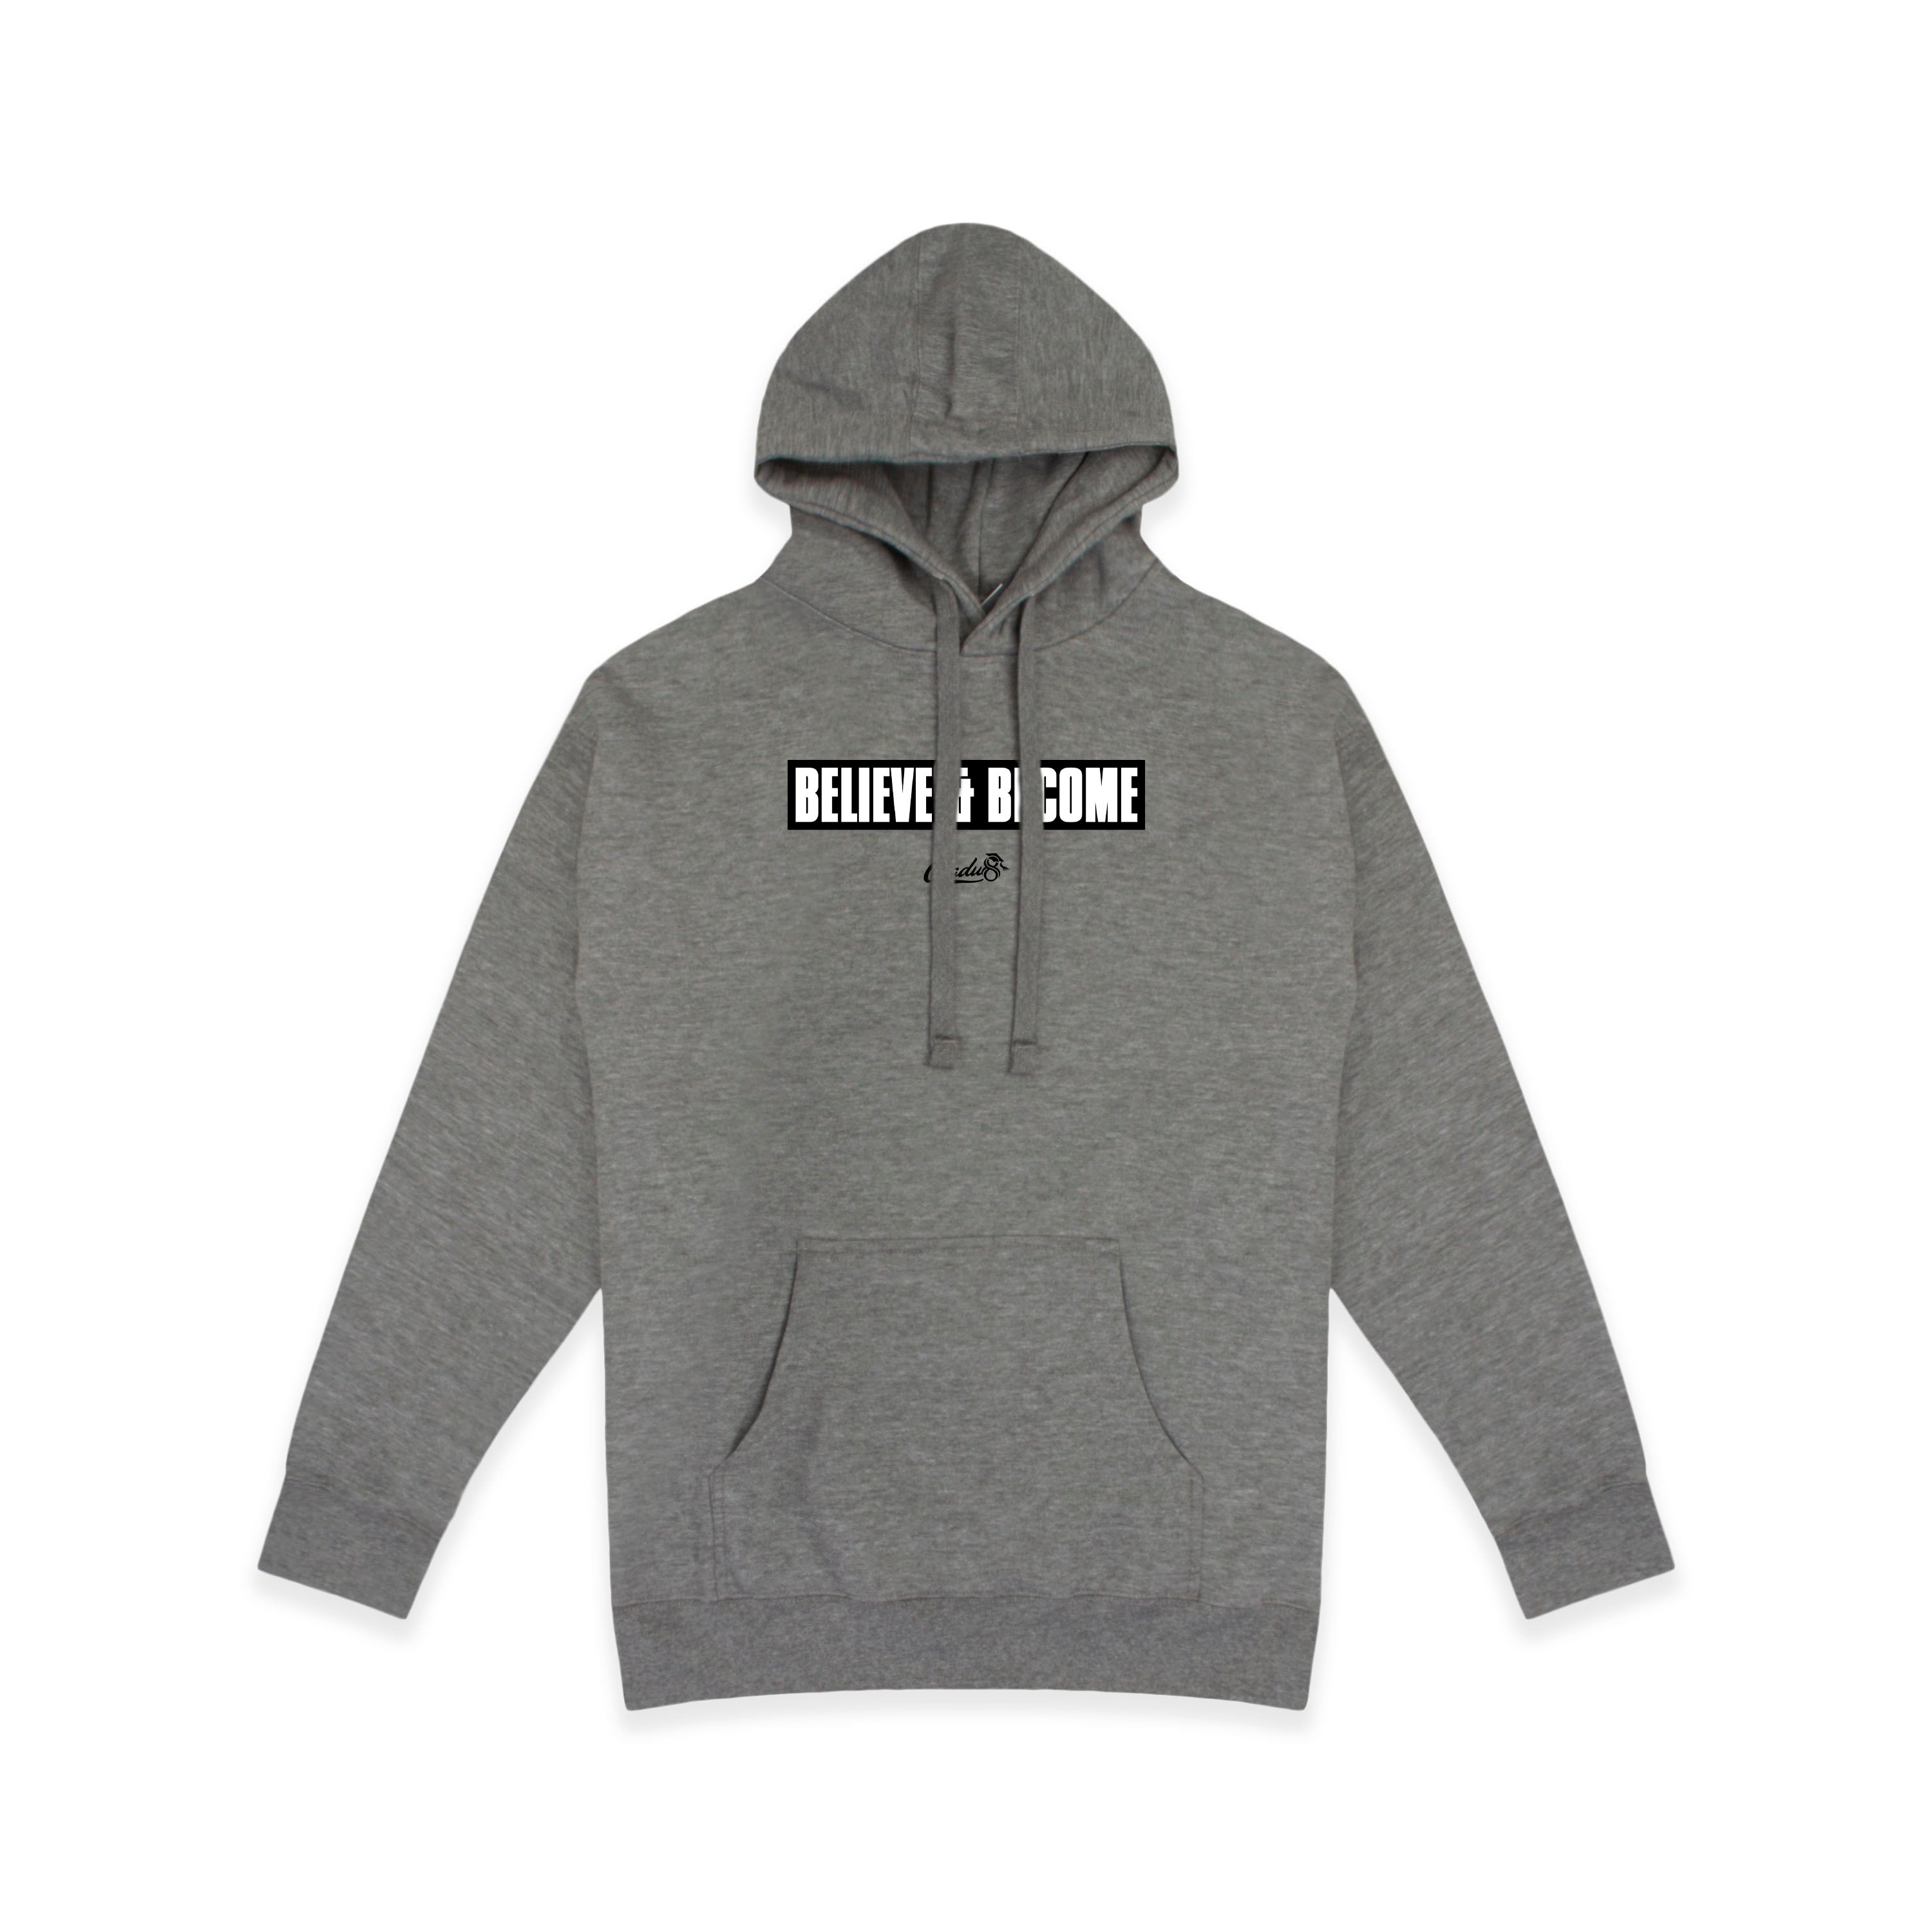 Copy of Believe & become Black Label Premium Pullover Hoodie - custom test